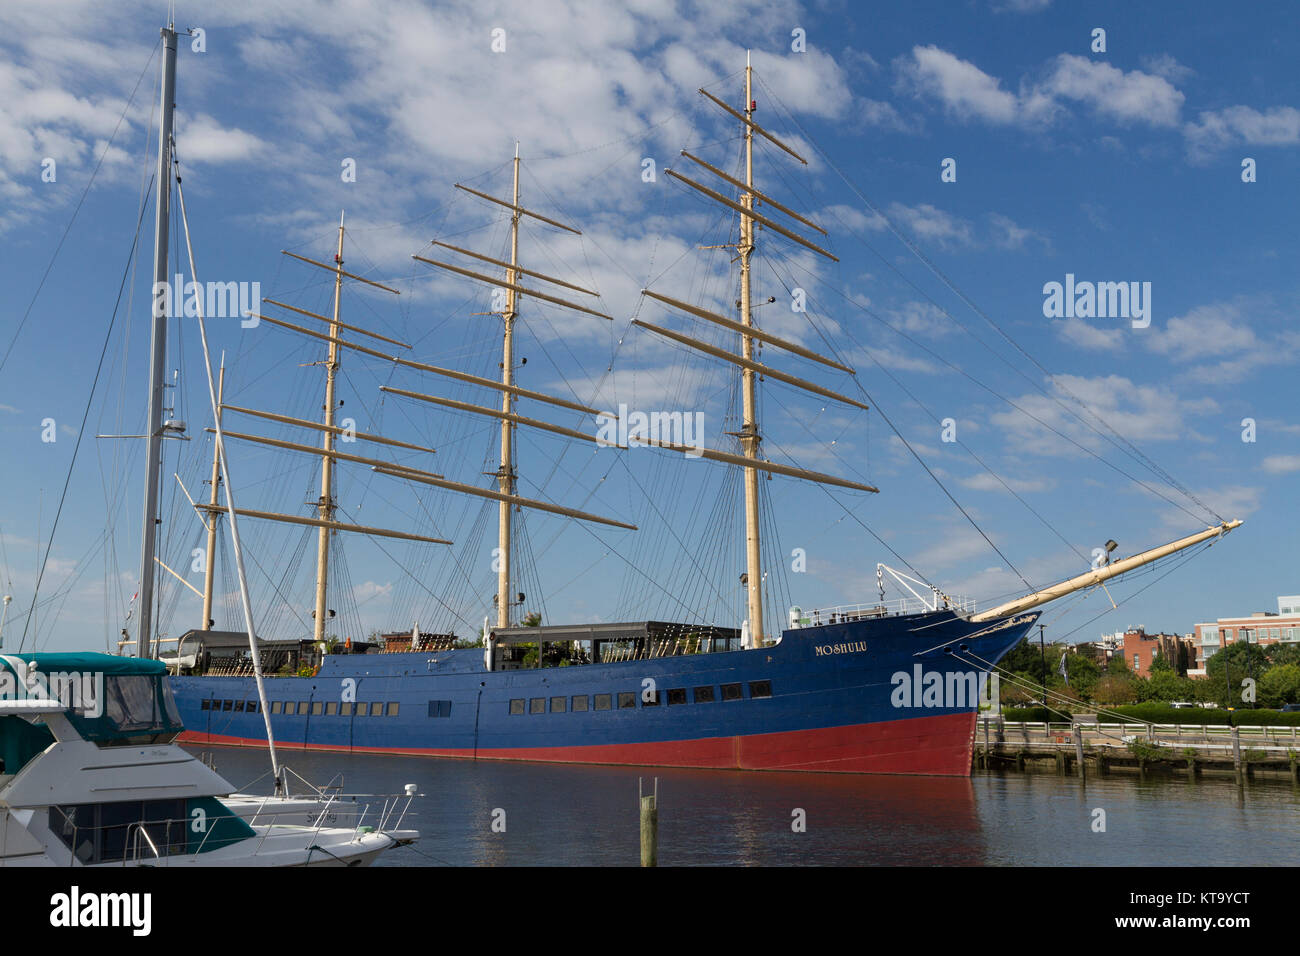 Le Moshulu, un quatre-mâts barque en acier converti en un restaurant flottant, Penns Landing Marina, Philadelphia, Pennsylvania, United States. Banque D'Images